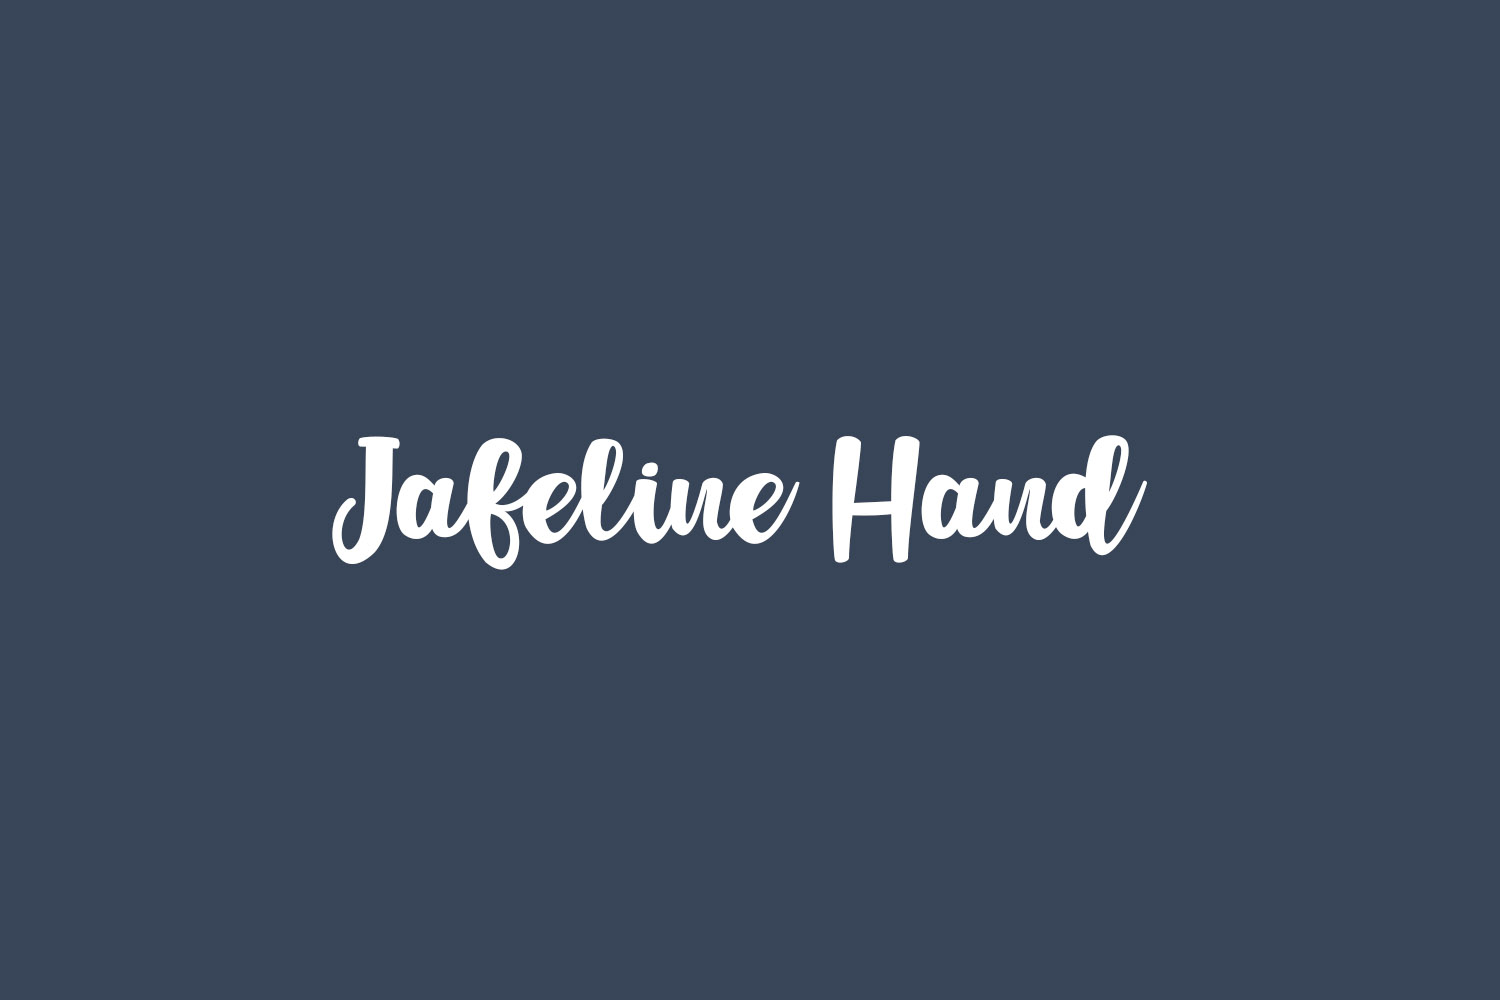 Jafeline Hand Free Font